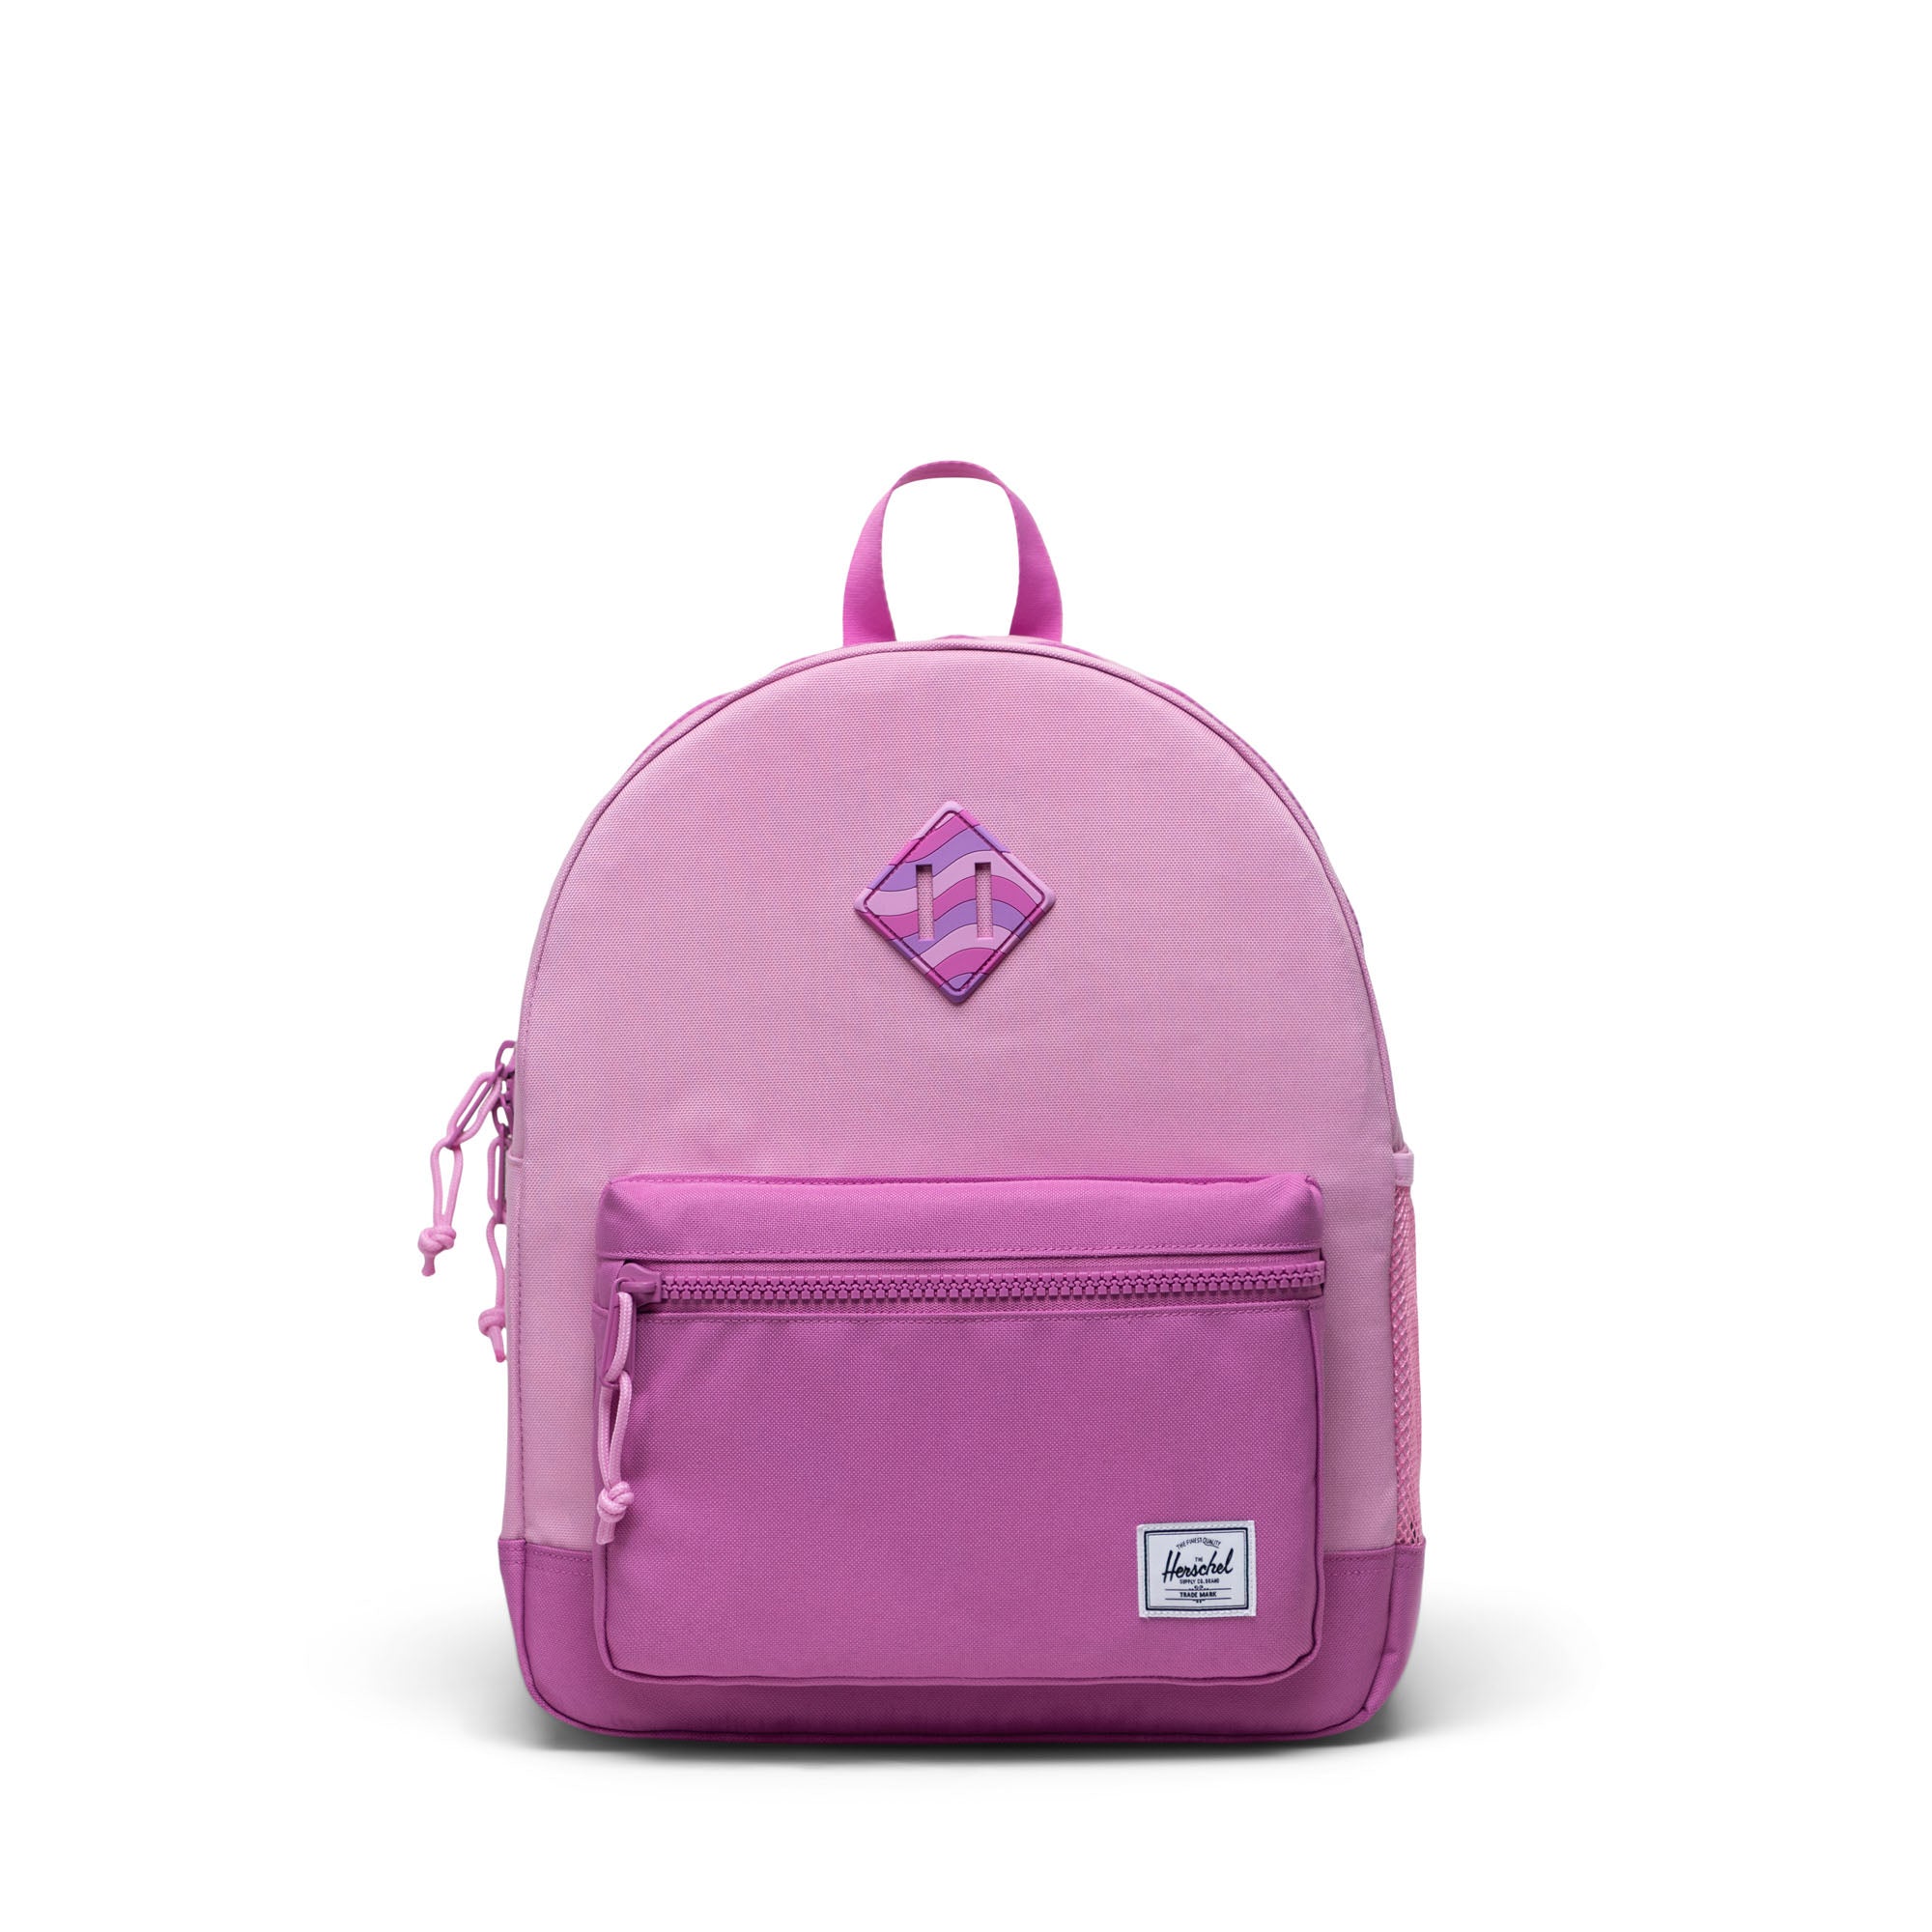 Herschel Heritage Backpack  |  Pastel Lavender/Spring Crocus